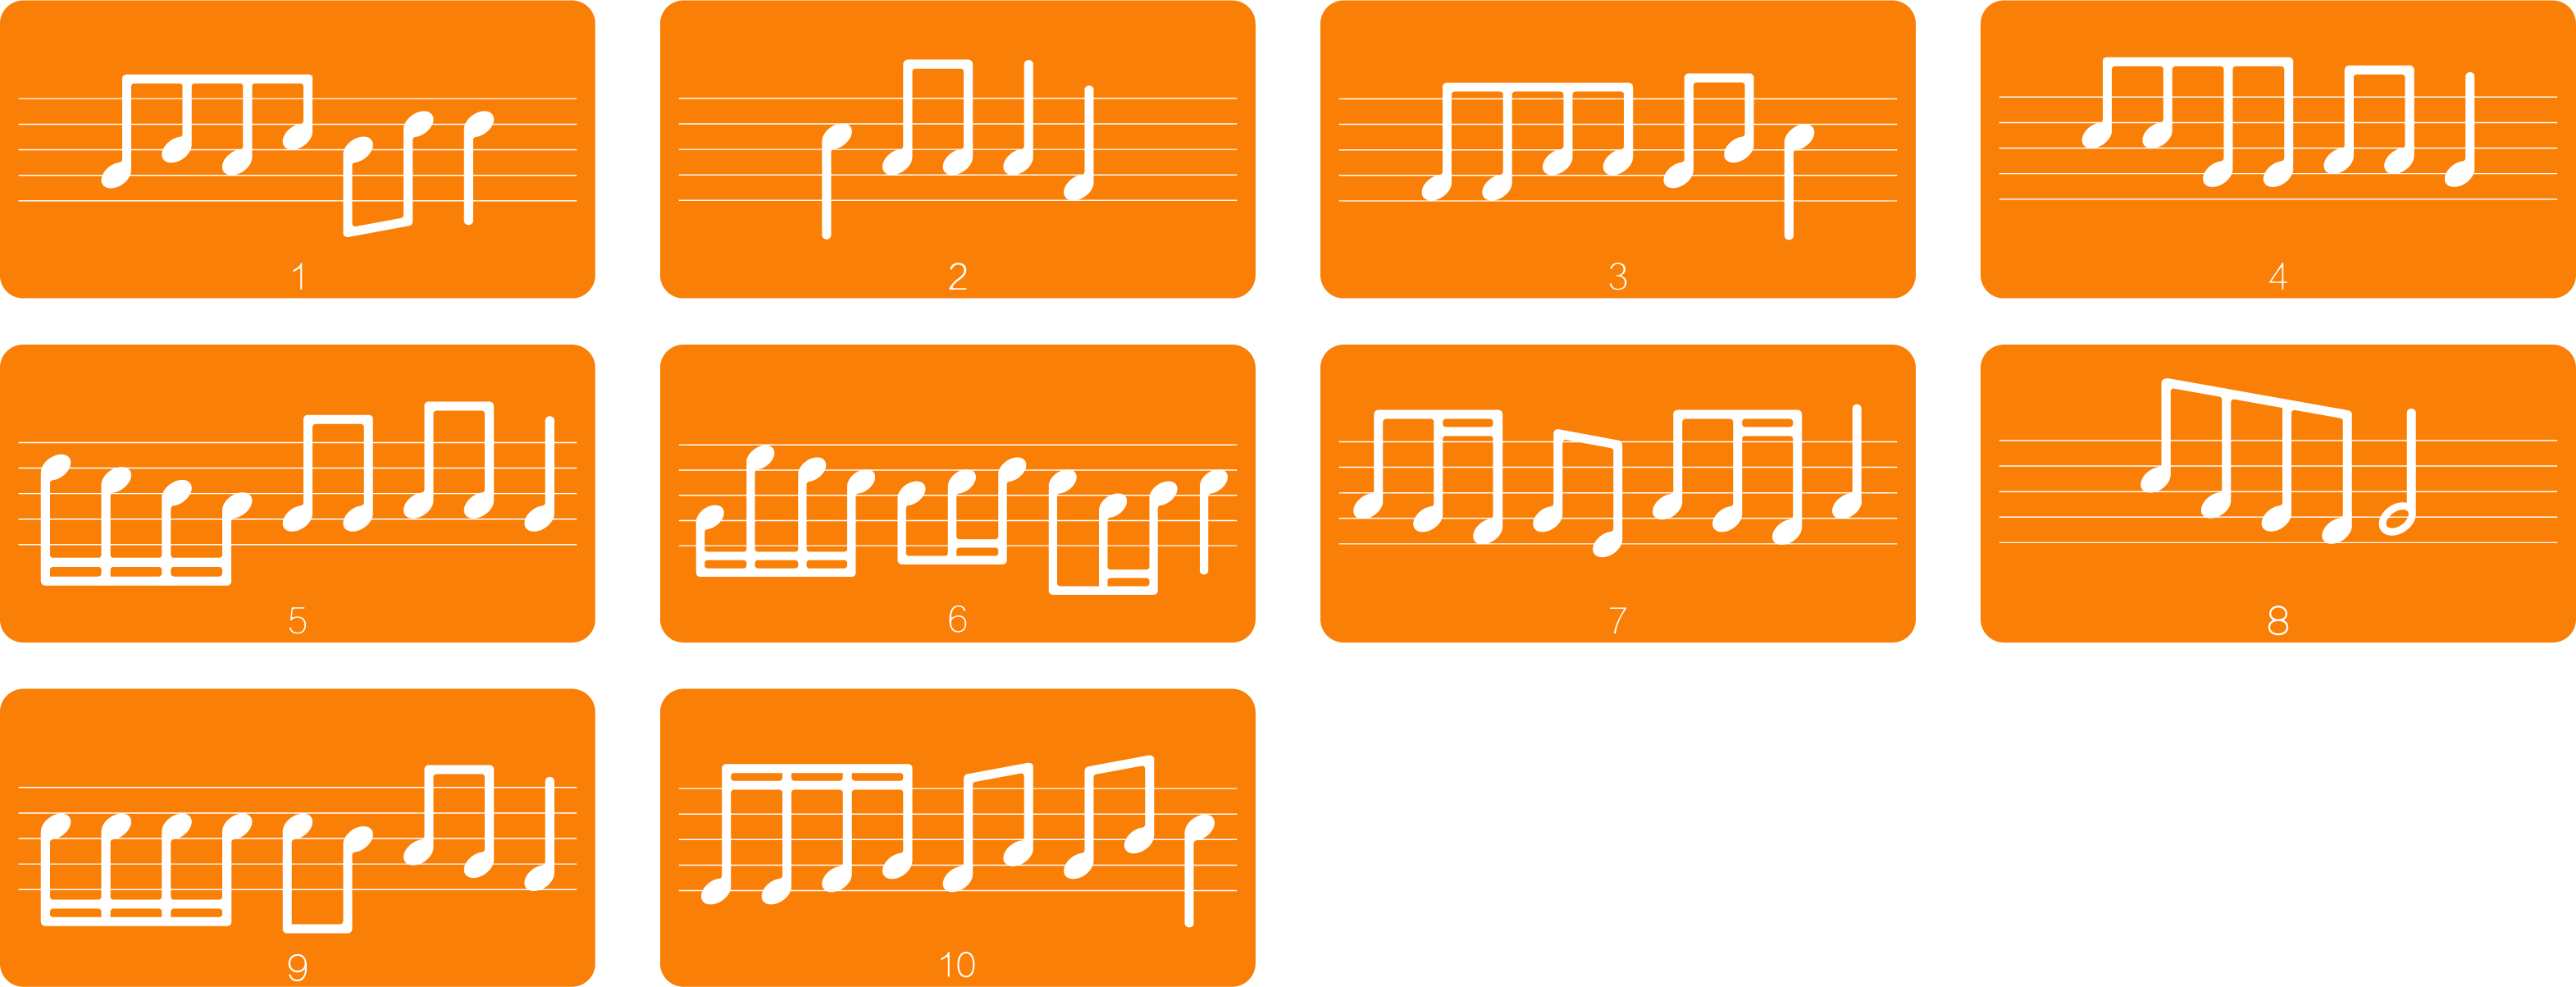 Music Sheet - STEM Toys for Kids - Matatalab